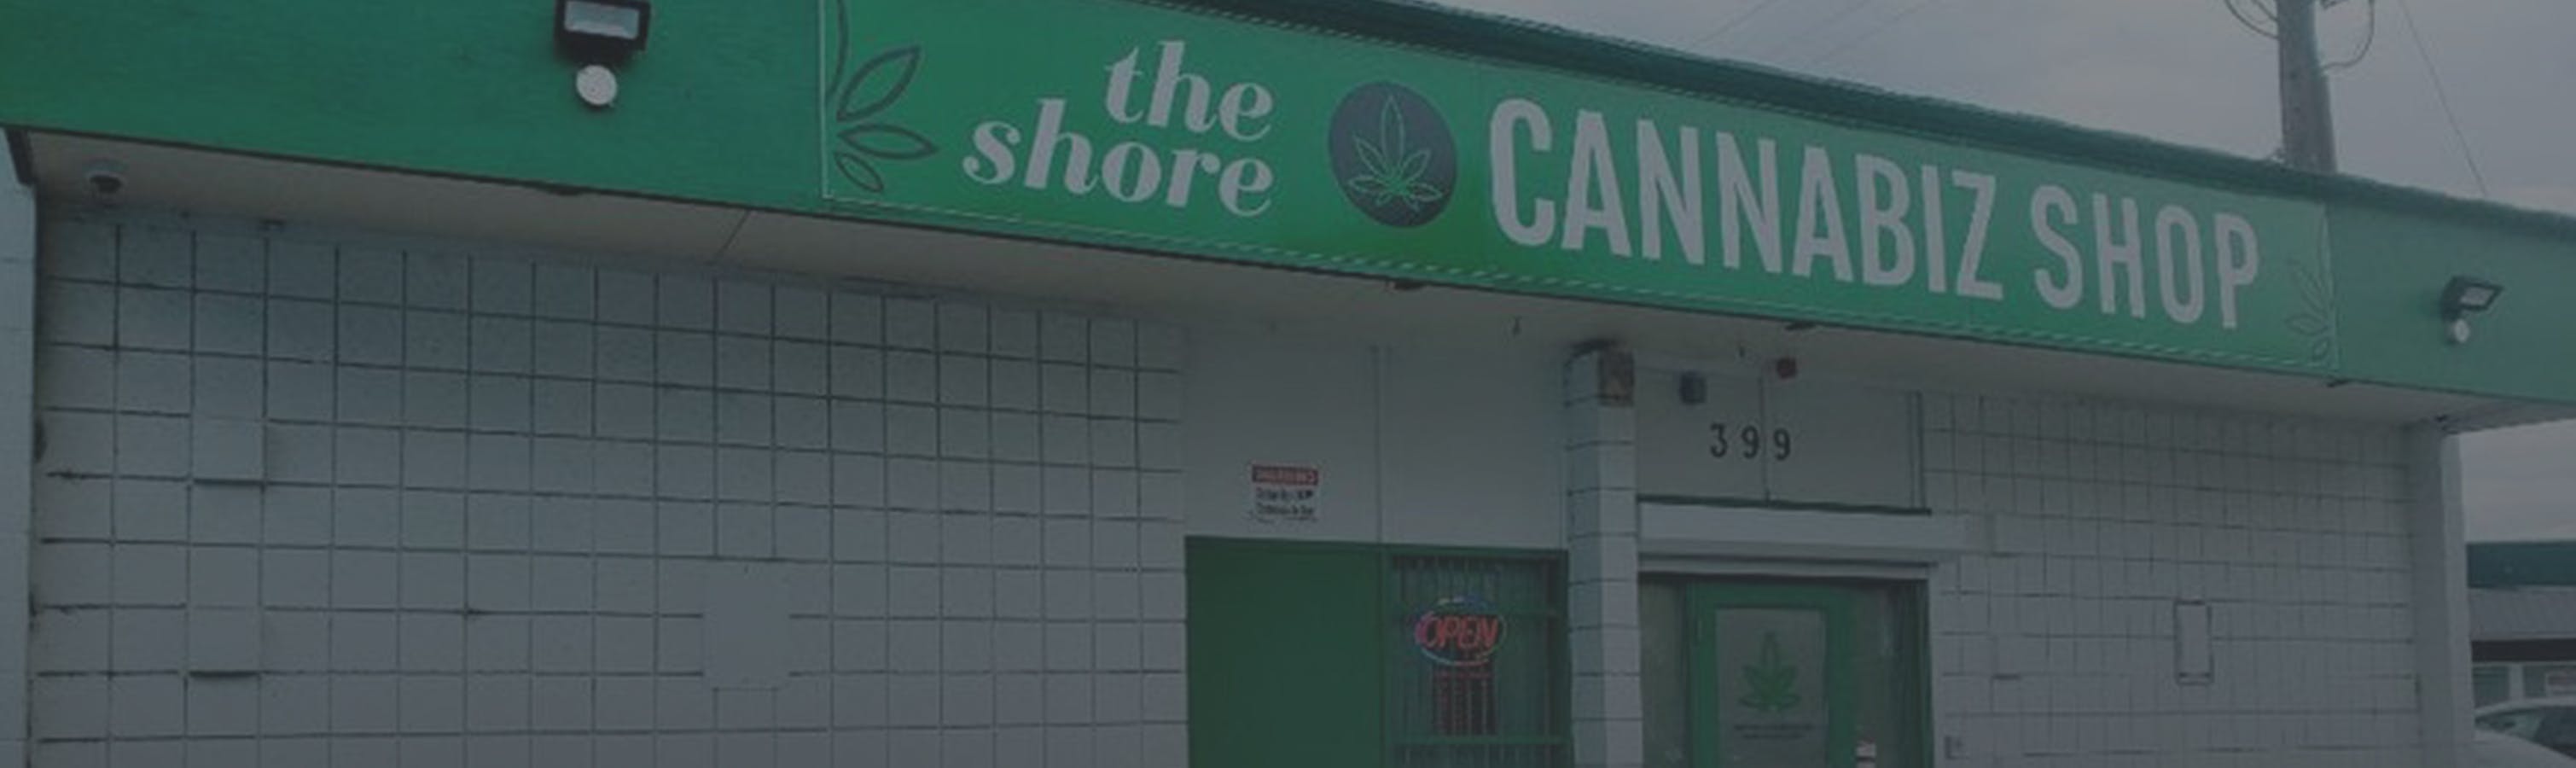 Cannabis Store The Shore Cannabiz Shop - 0